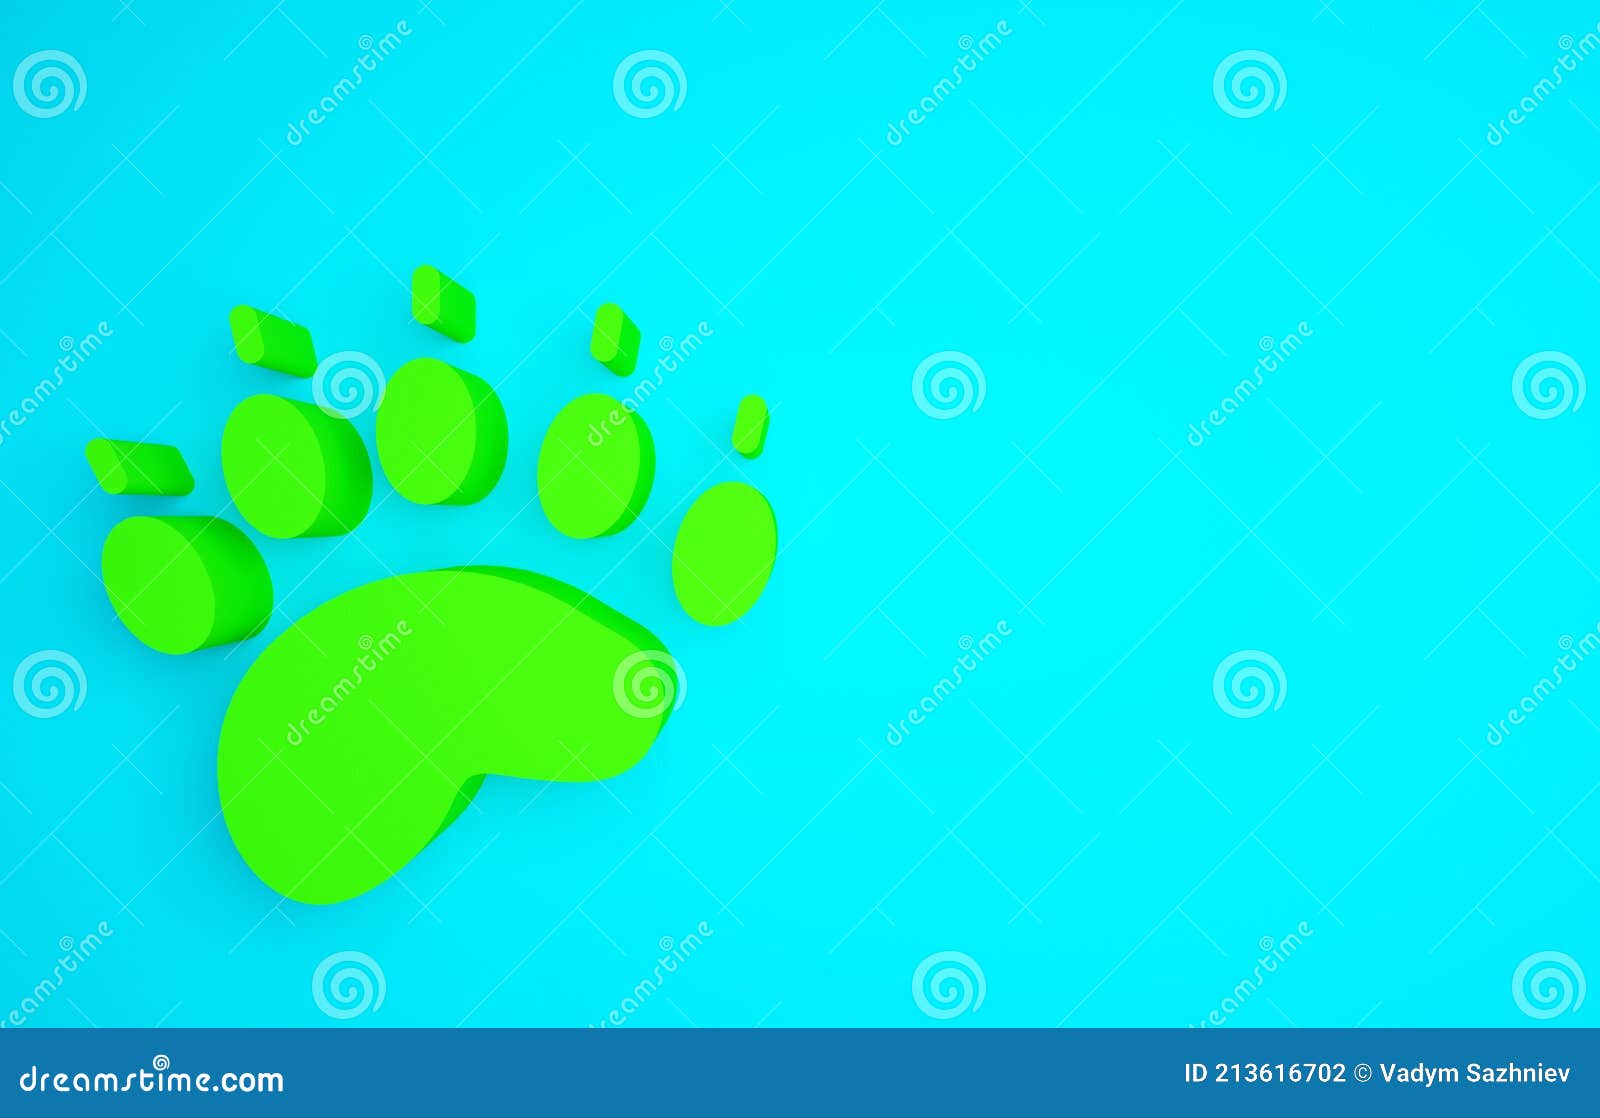 Green Bear Footprint Icon Isolated on Background. Minimalism Concept Stock Illustration Illustration of sport, icon: 213616702